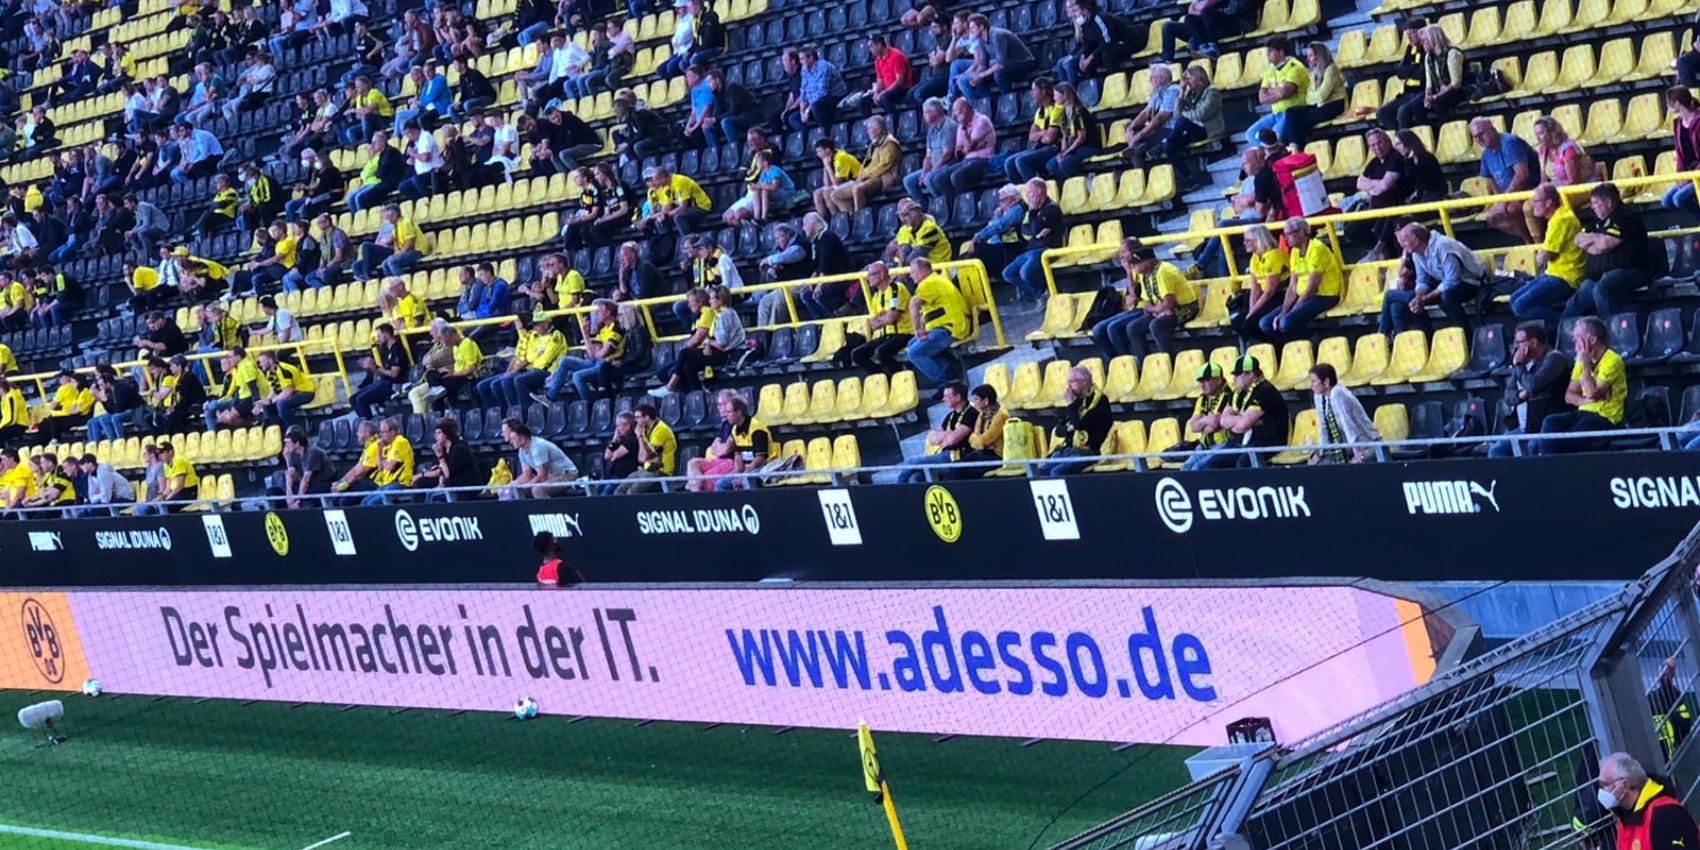 adesso-Werbung im BVB-Stadium